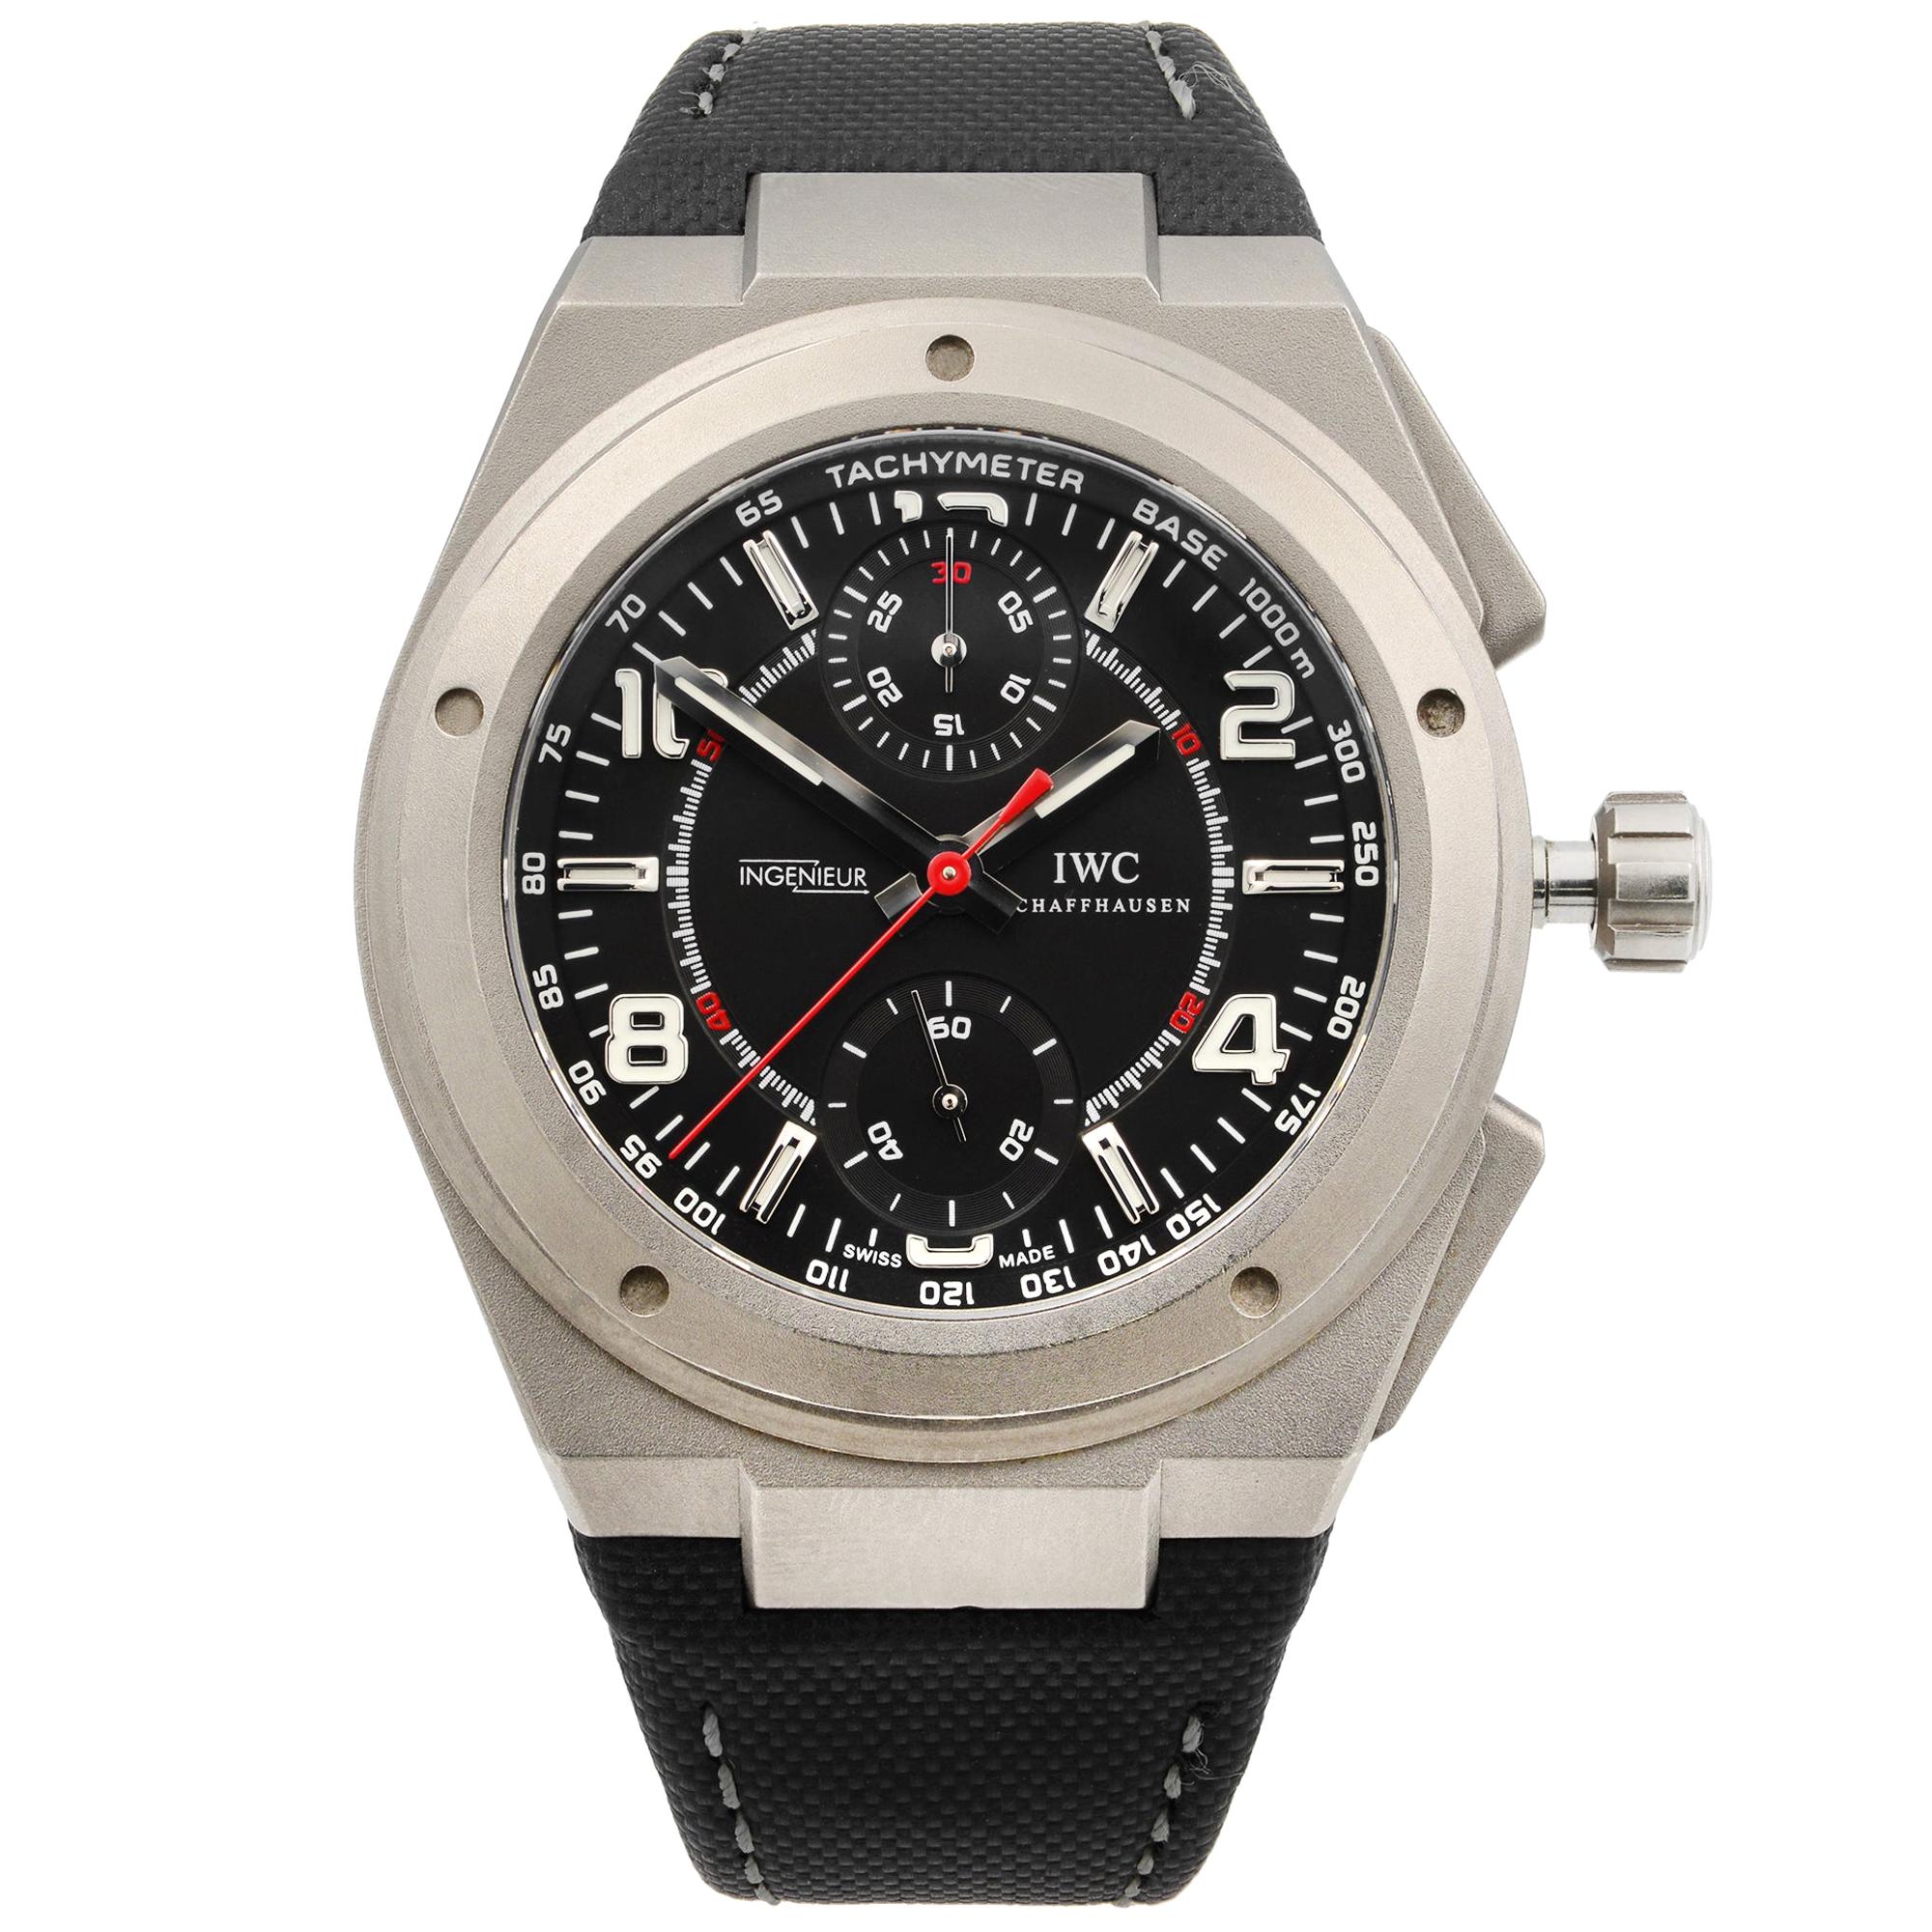 IWC Ingenieur for Mercedes-AMG Titanium Black Dial Automatic Watch IW372503